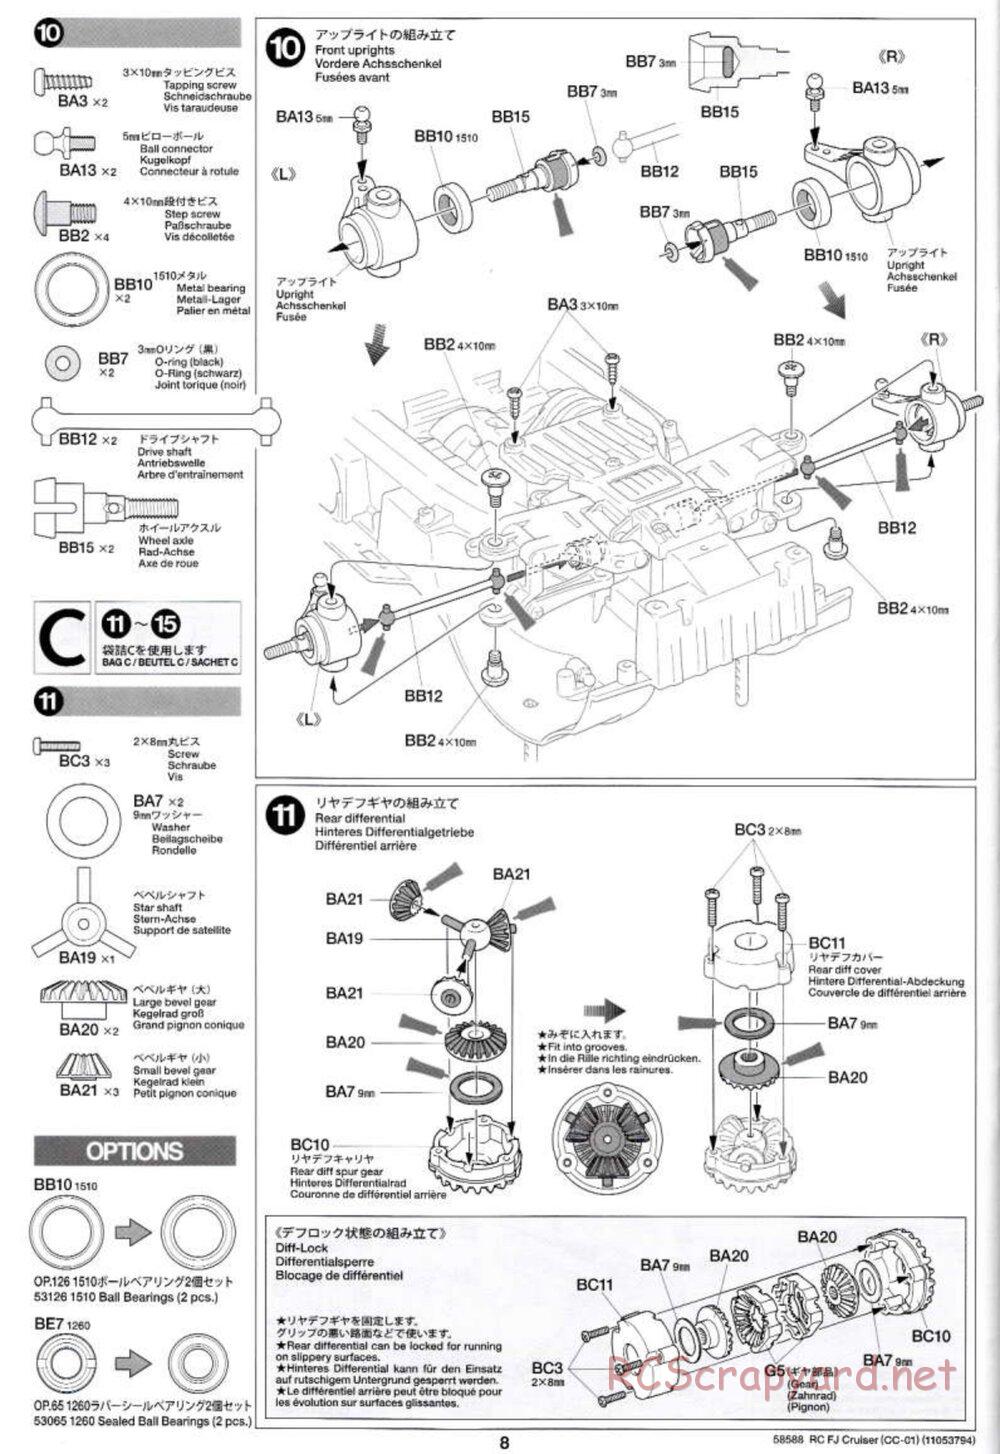 Tamiya - Toyota FJ Cruiser - CC-01 Chassis - Manual - Page 8